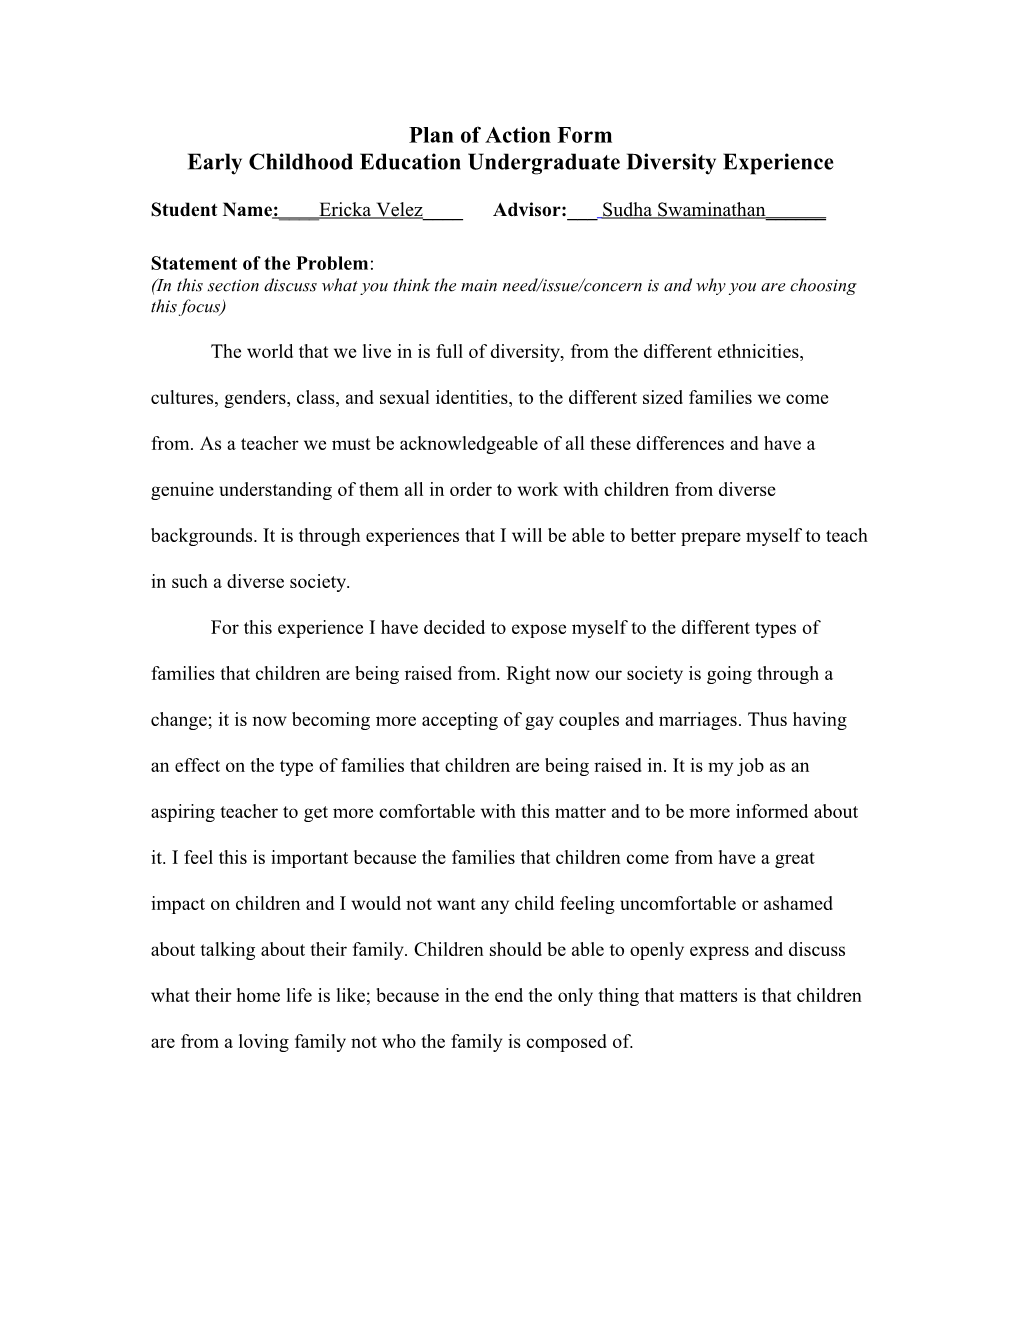 Early Childhood Education Undergraduate Diversity Experience